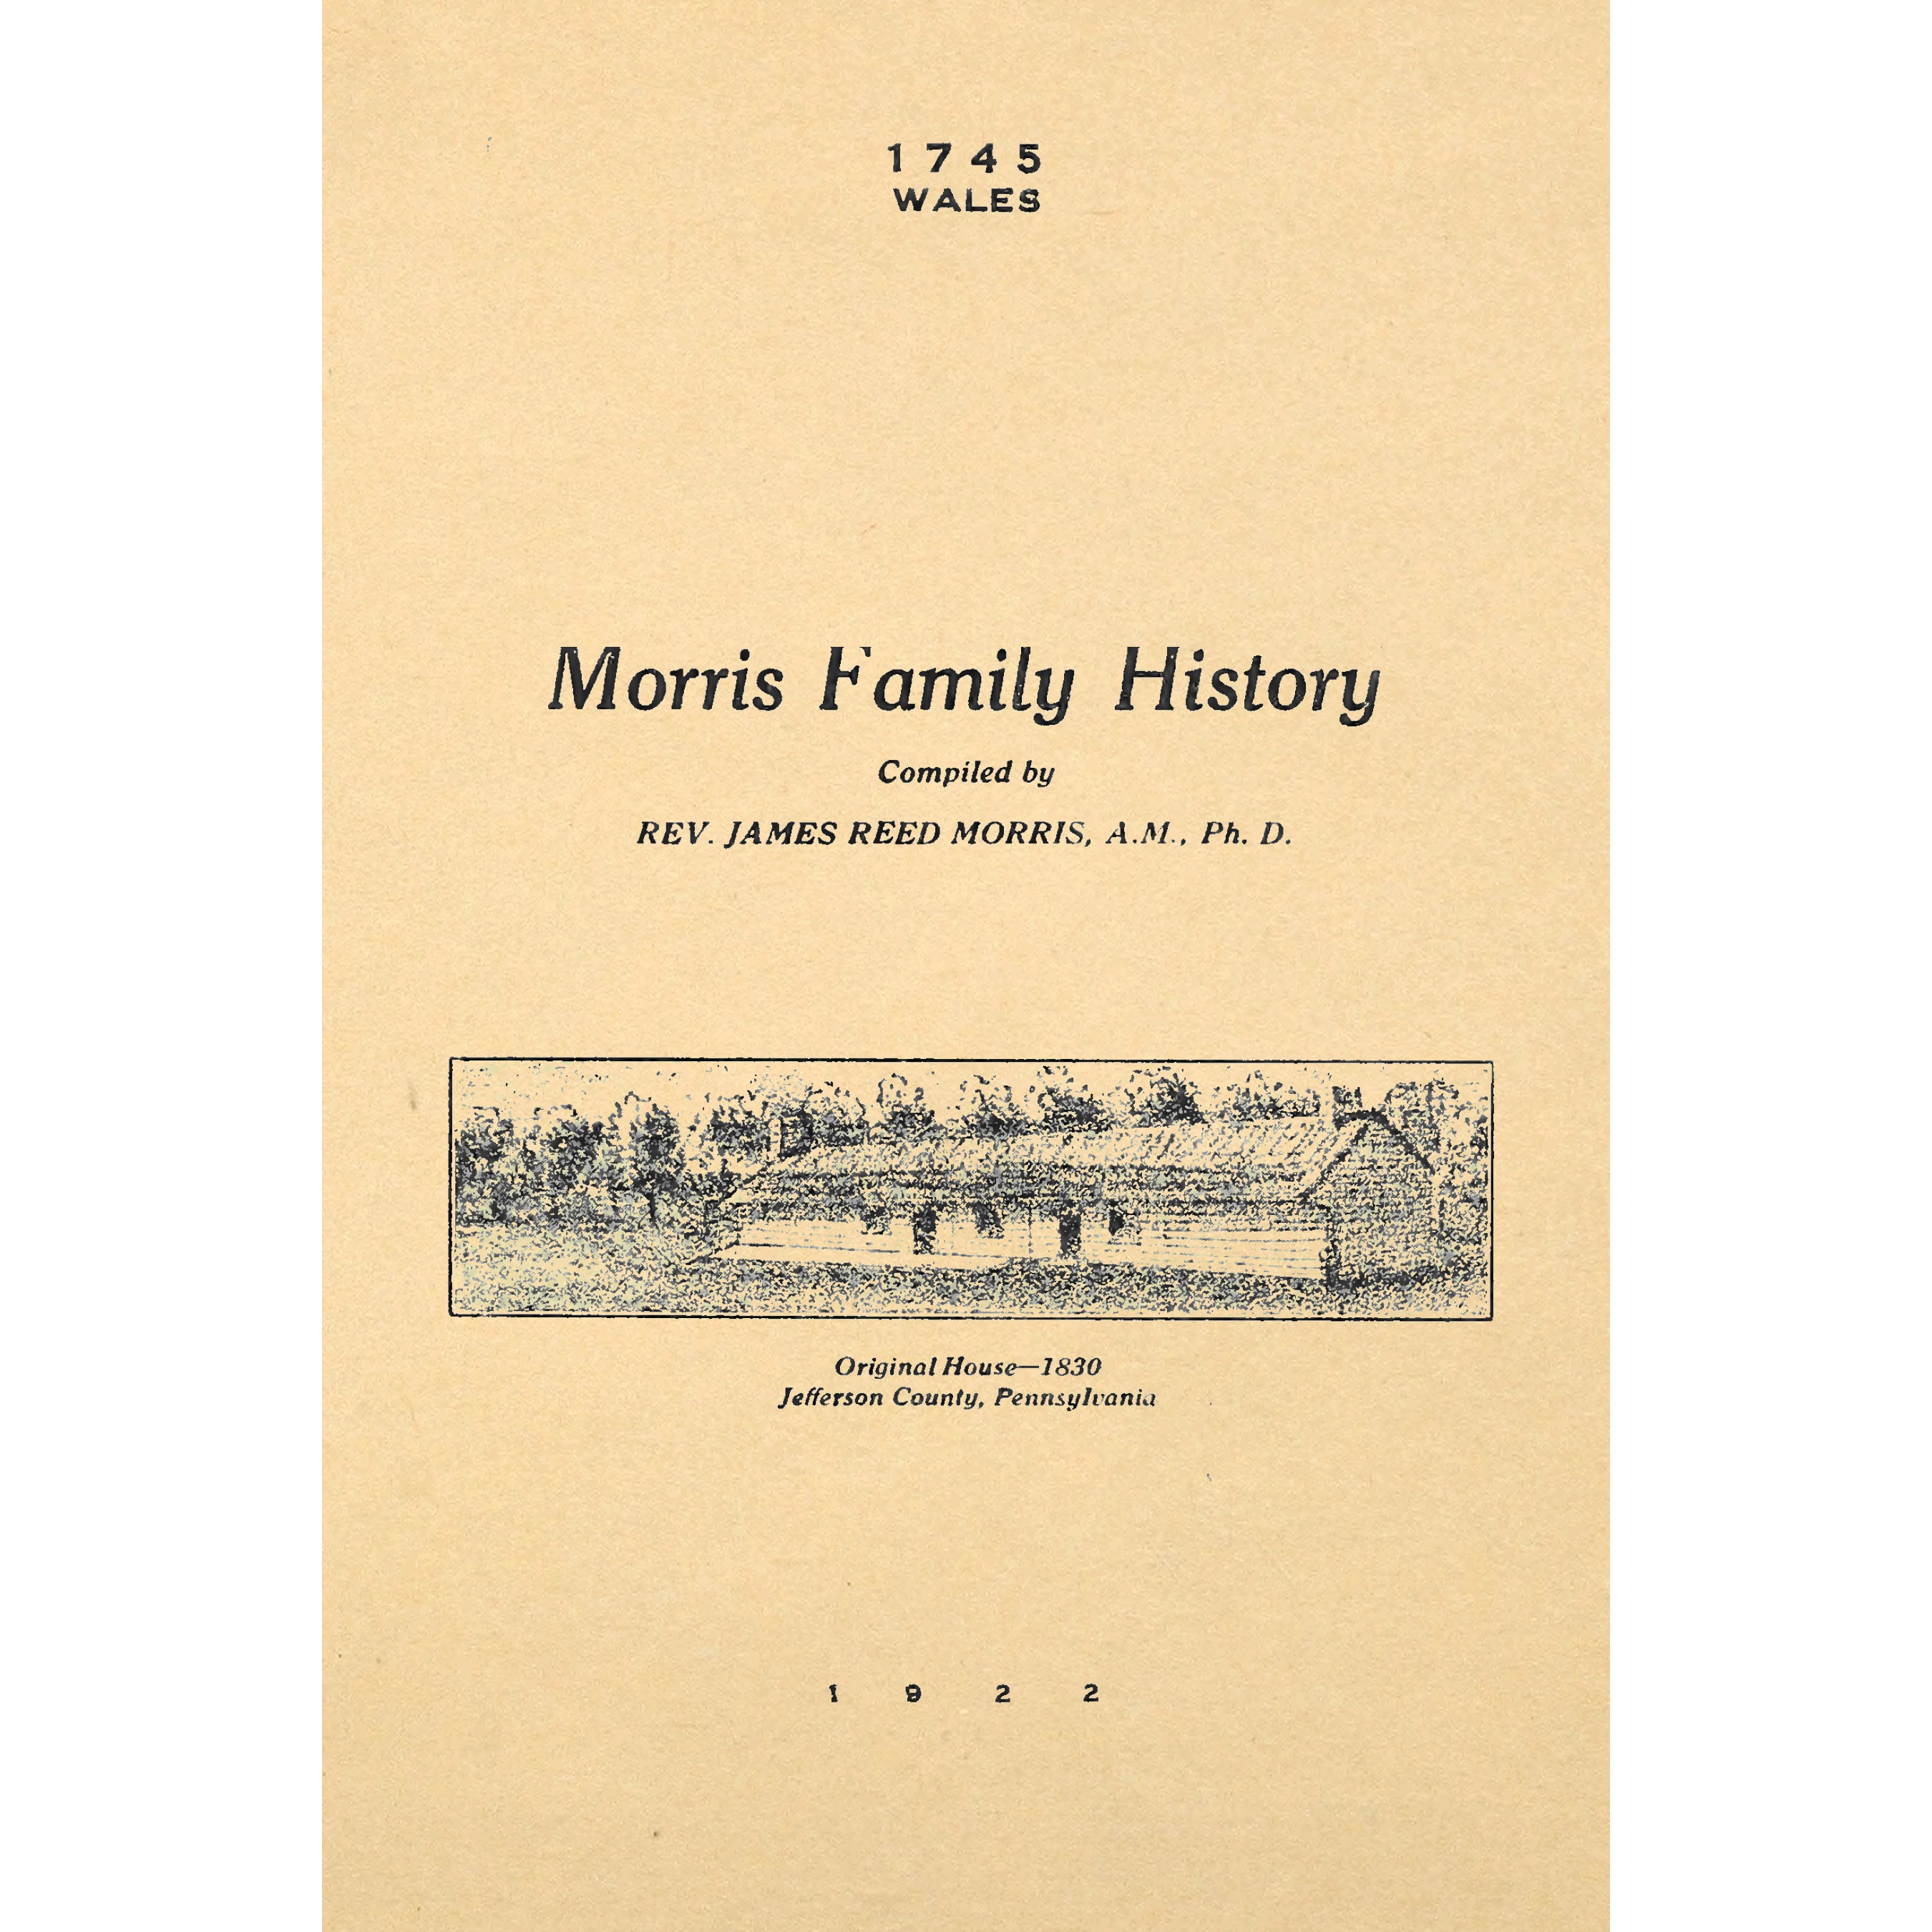 Morris Family History